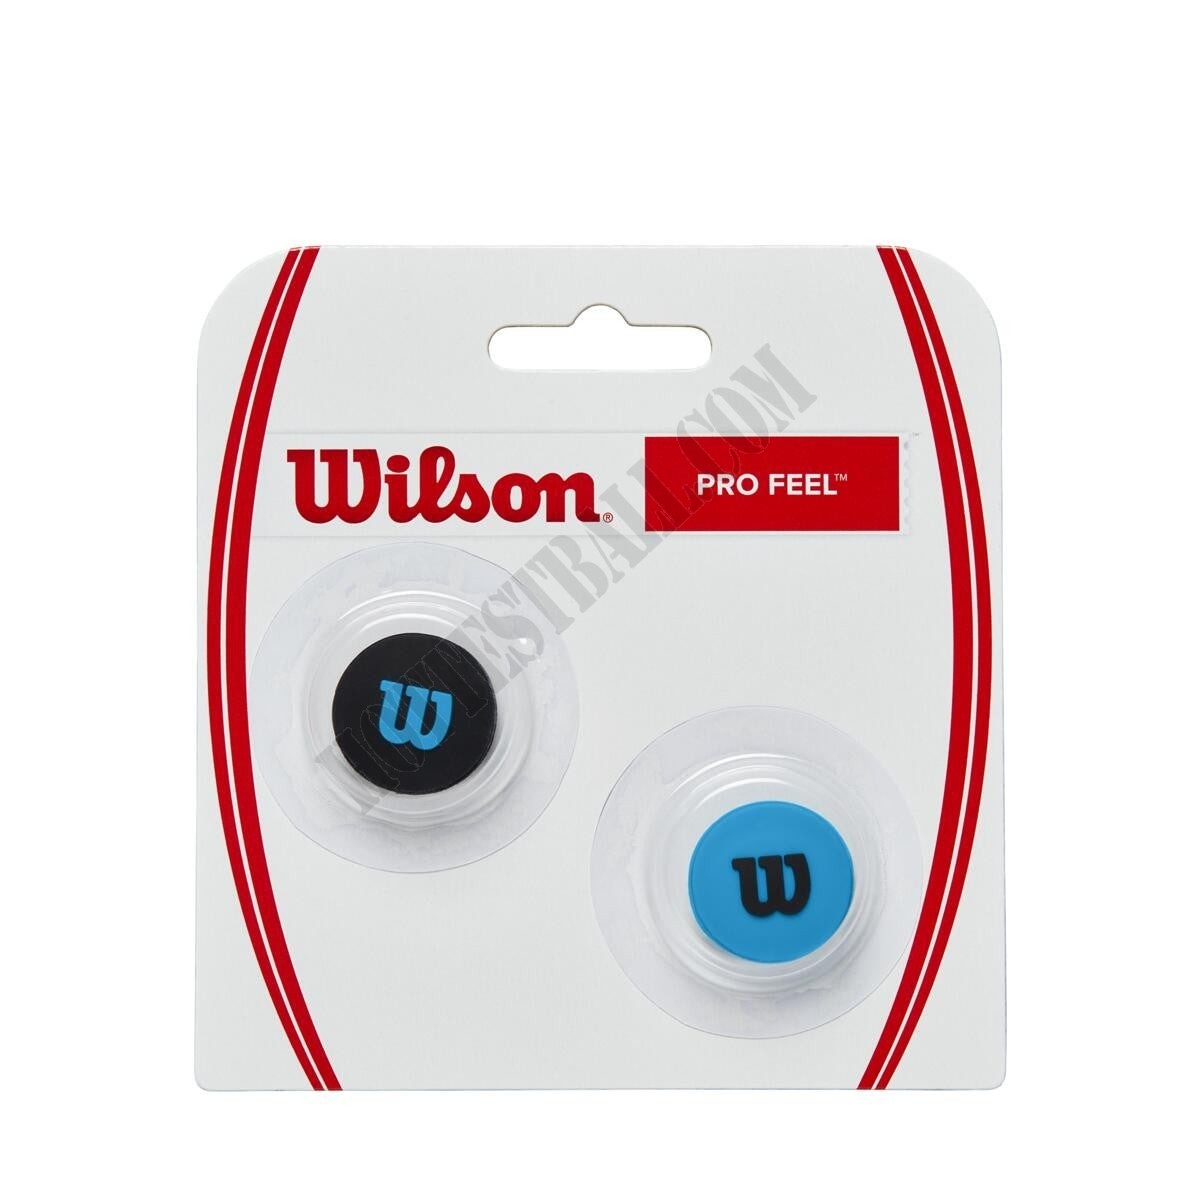 Ultra Pro Feel Dampener 2 Pack - Wilson Discount Store - Ultra Pro Feel Dampener 2 Pack - Wilson Discount Store